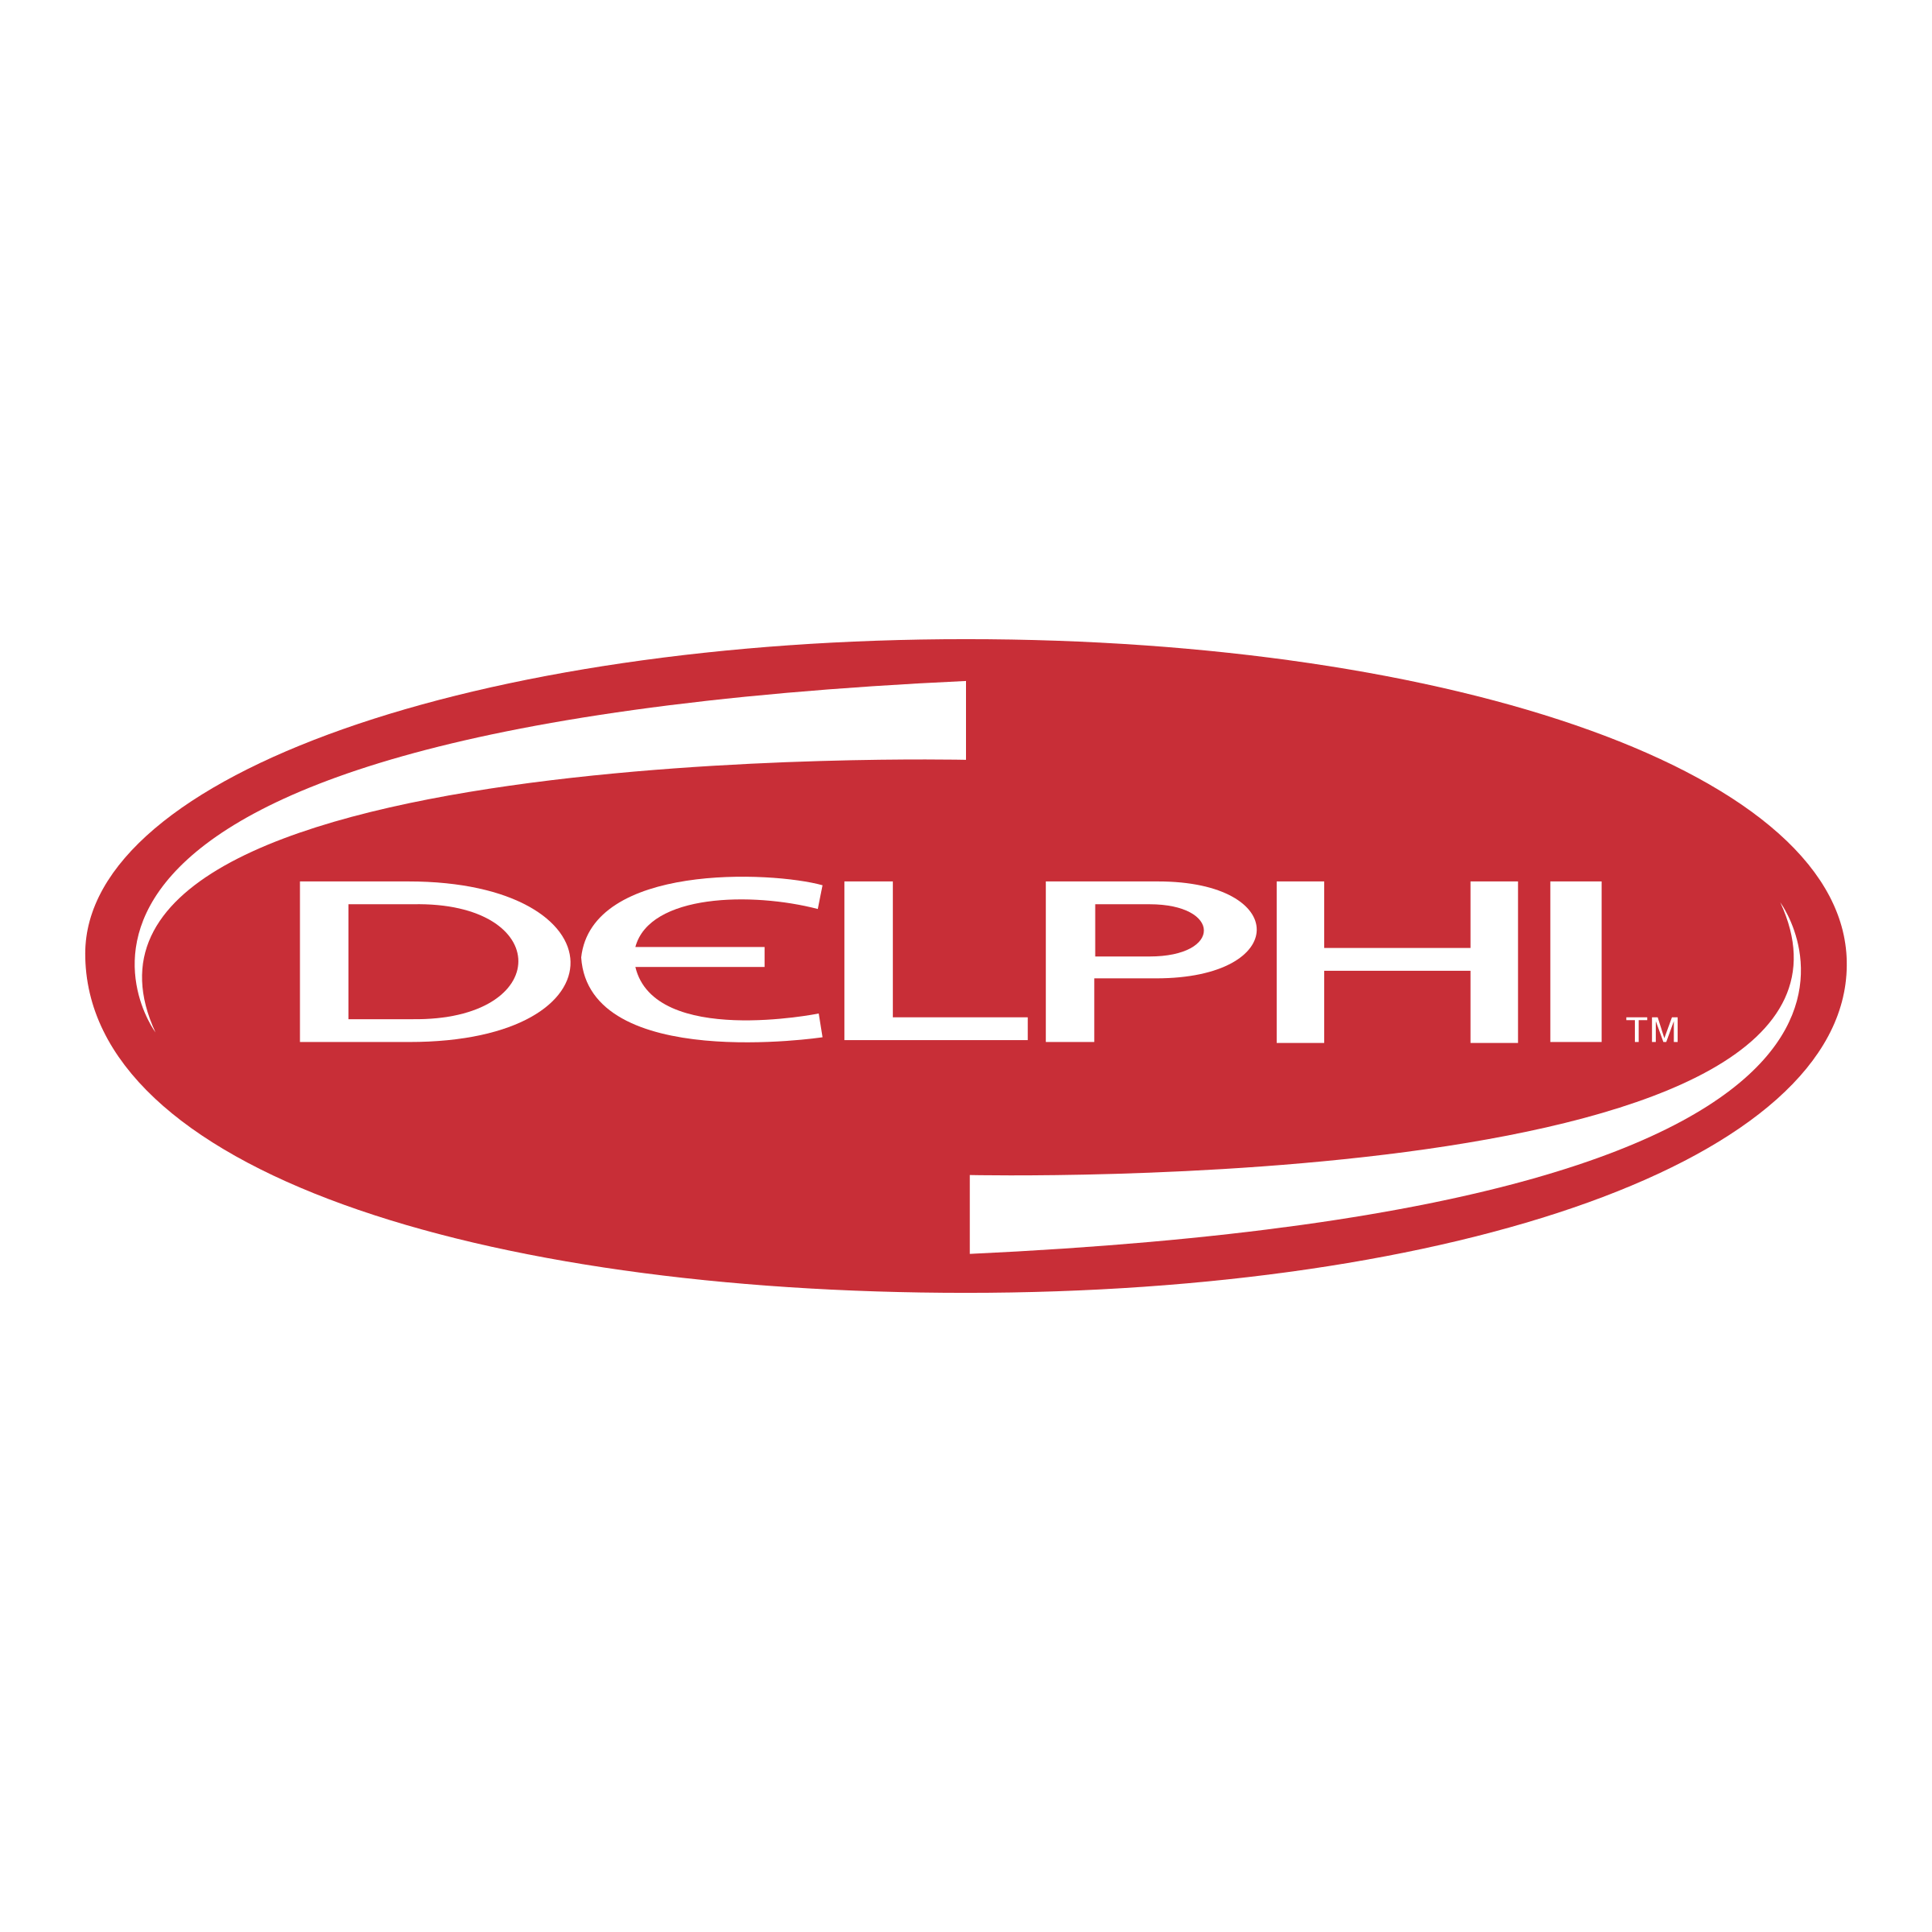 Delphi Logo - Delphi Logo PNG Transparent & SVG Vector - Freebie Supply